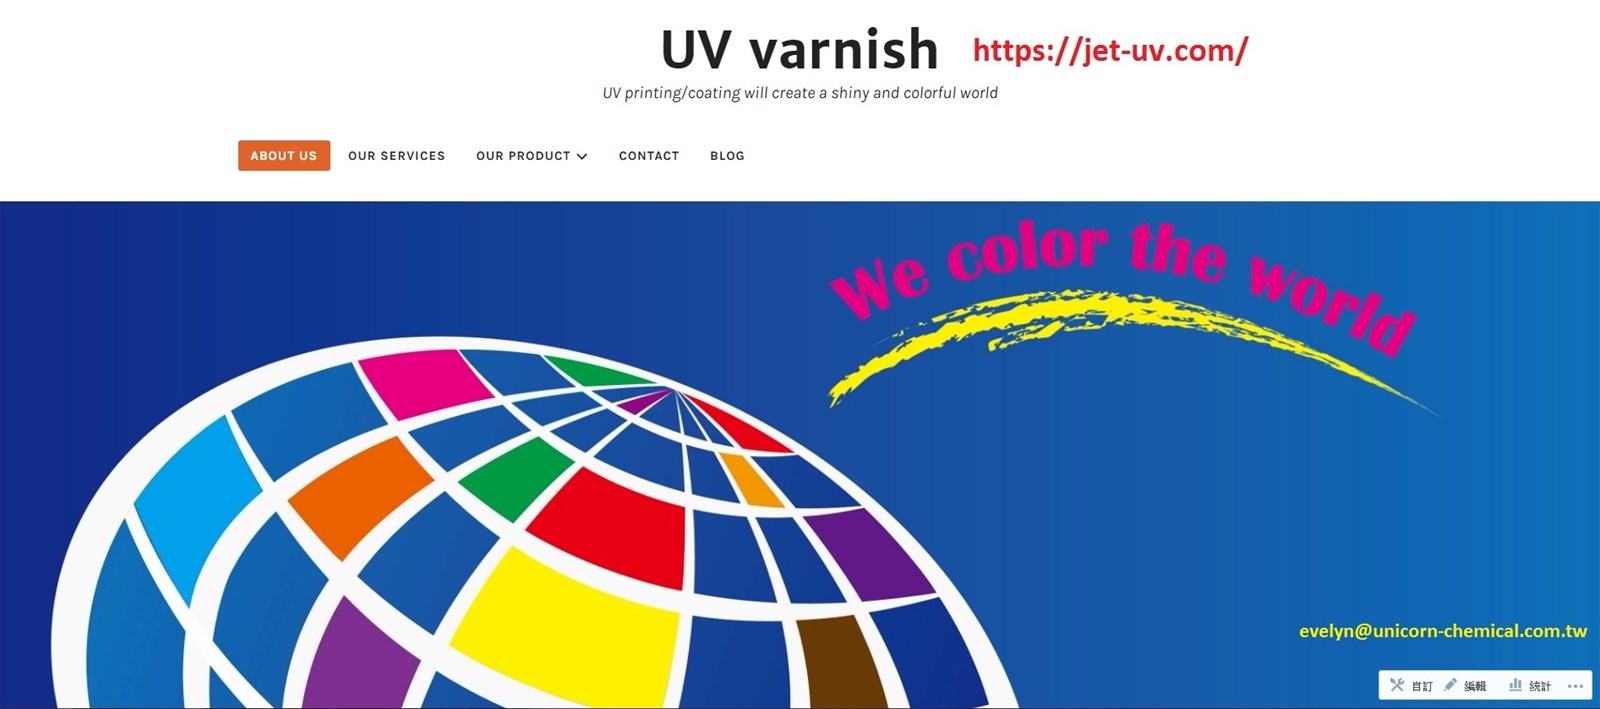 UV varnishing by offset or silkscreen